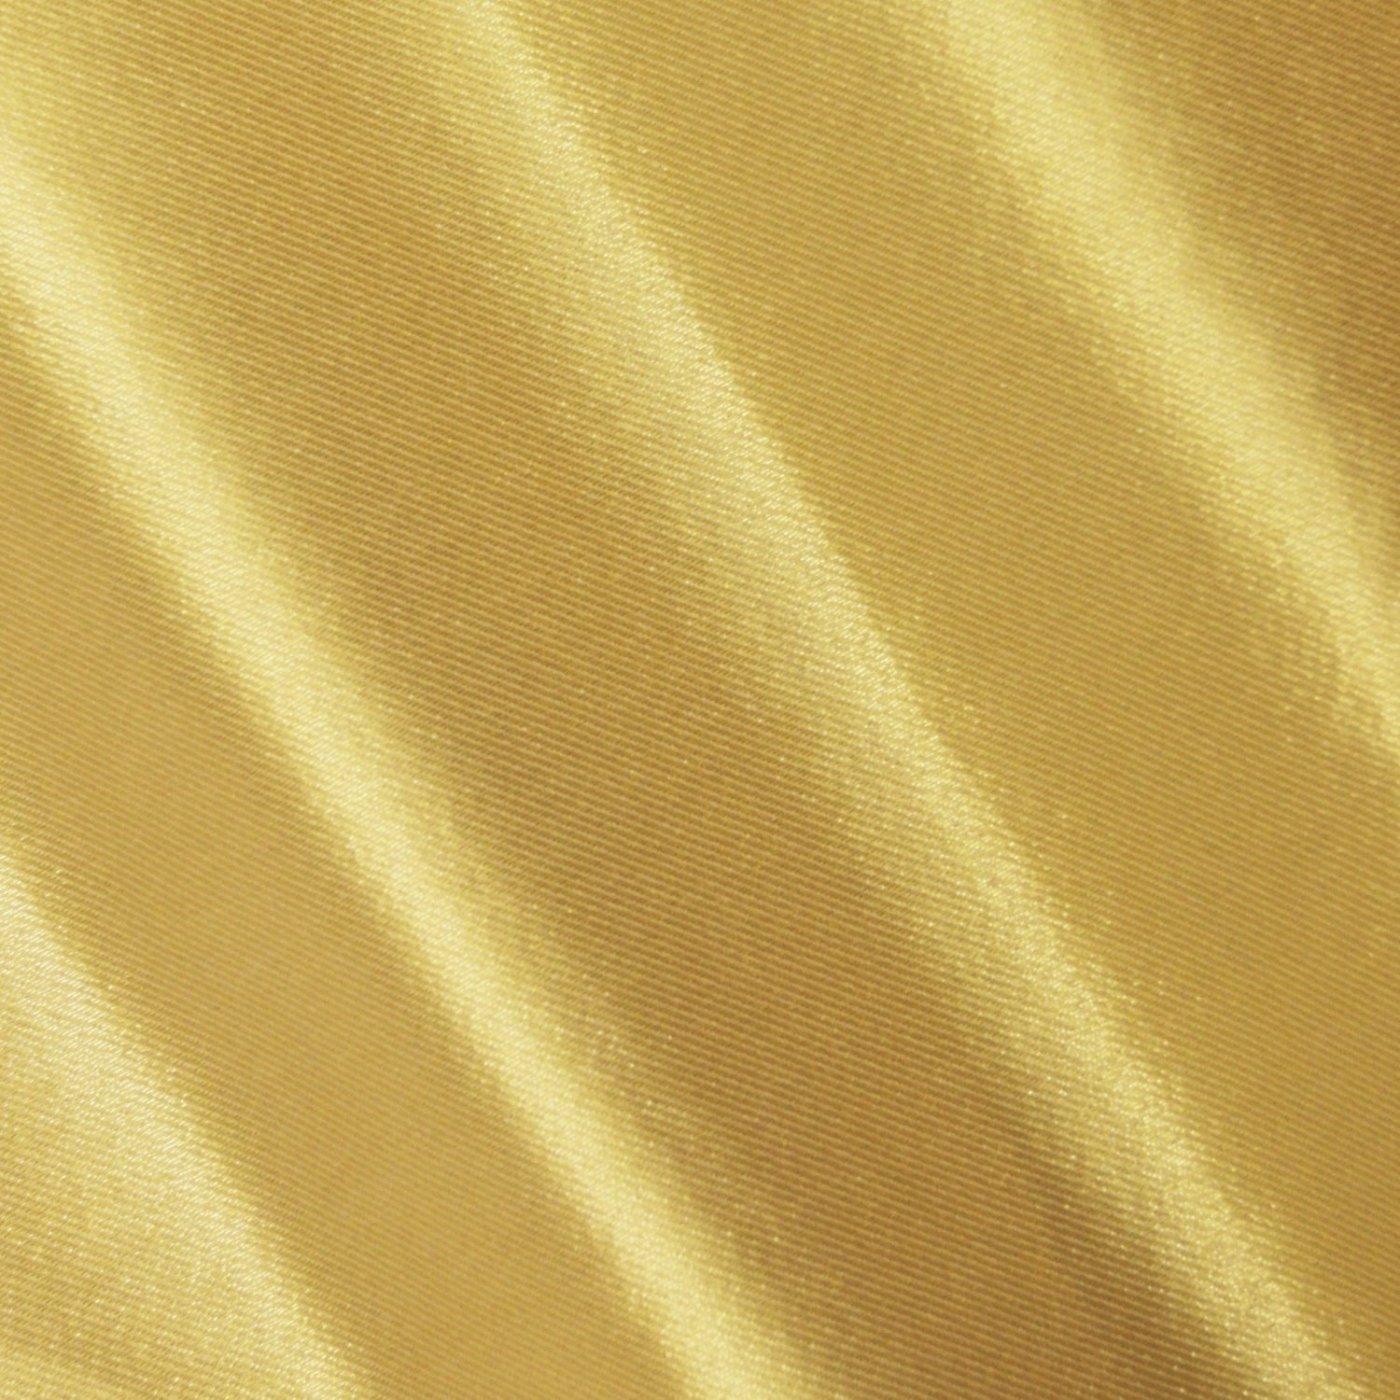 Watts' Cloth of Gold - Watts & Co.